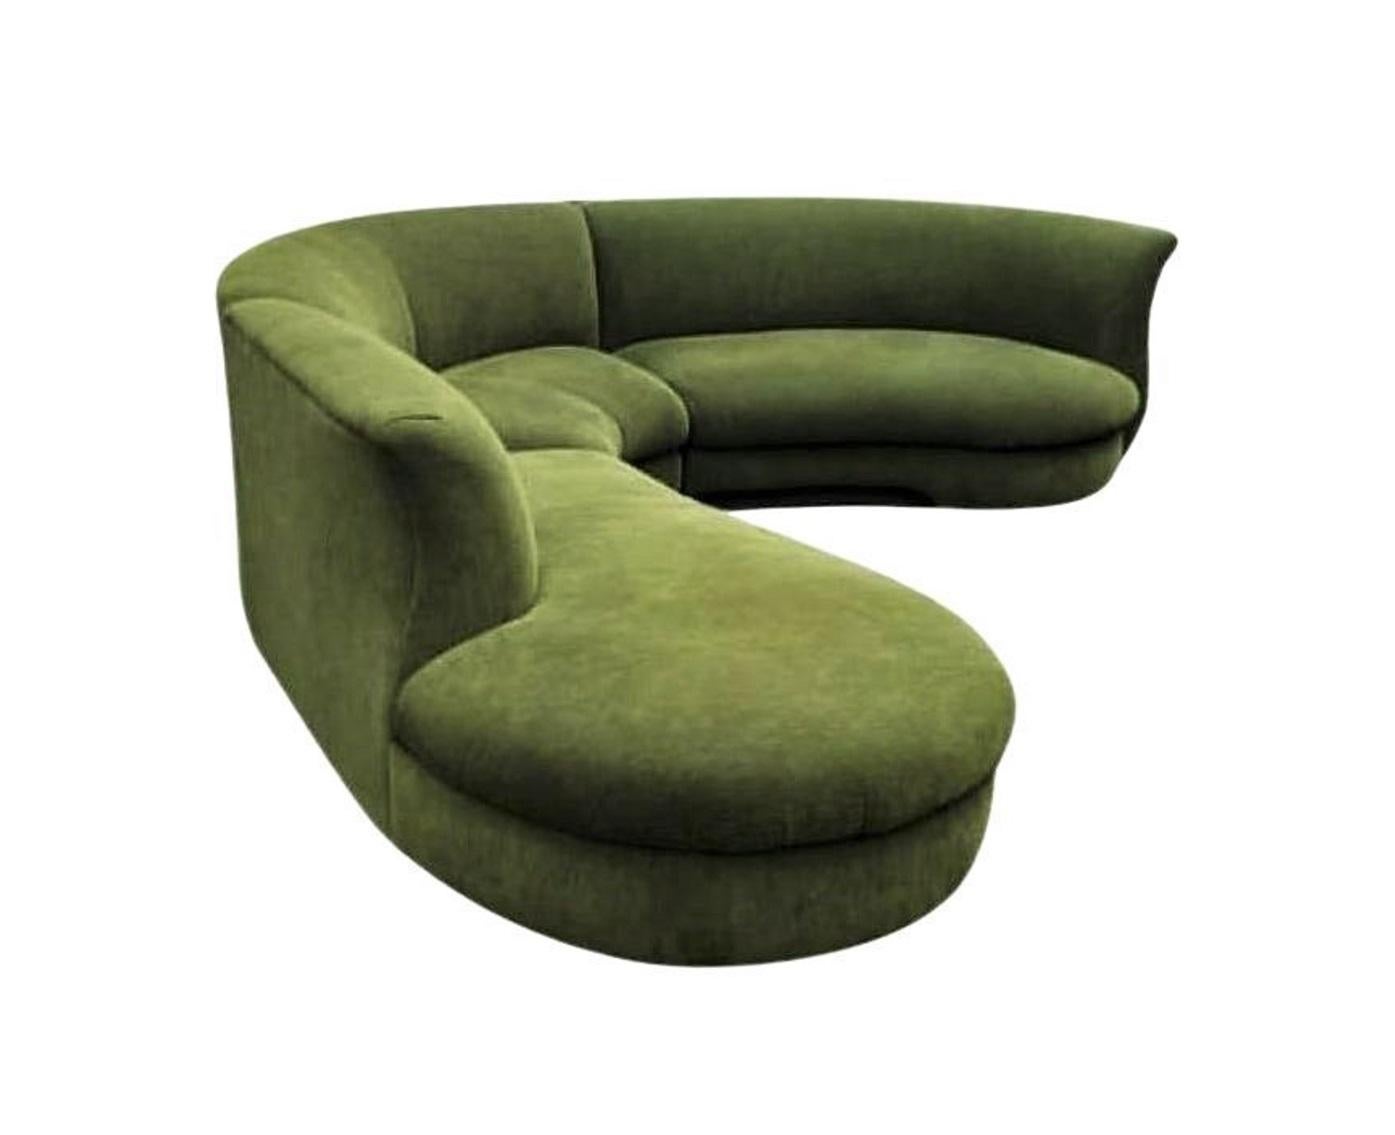 American 1980s Vladimir Kagan Style Three-Piece Curved Sectional Sofa